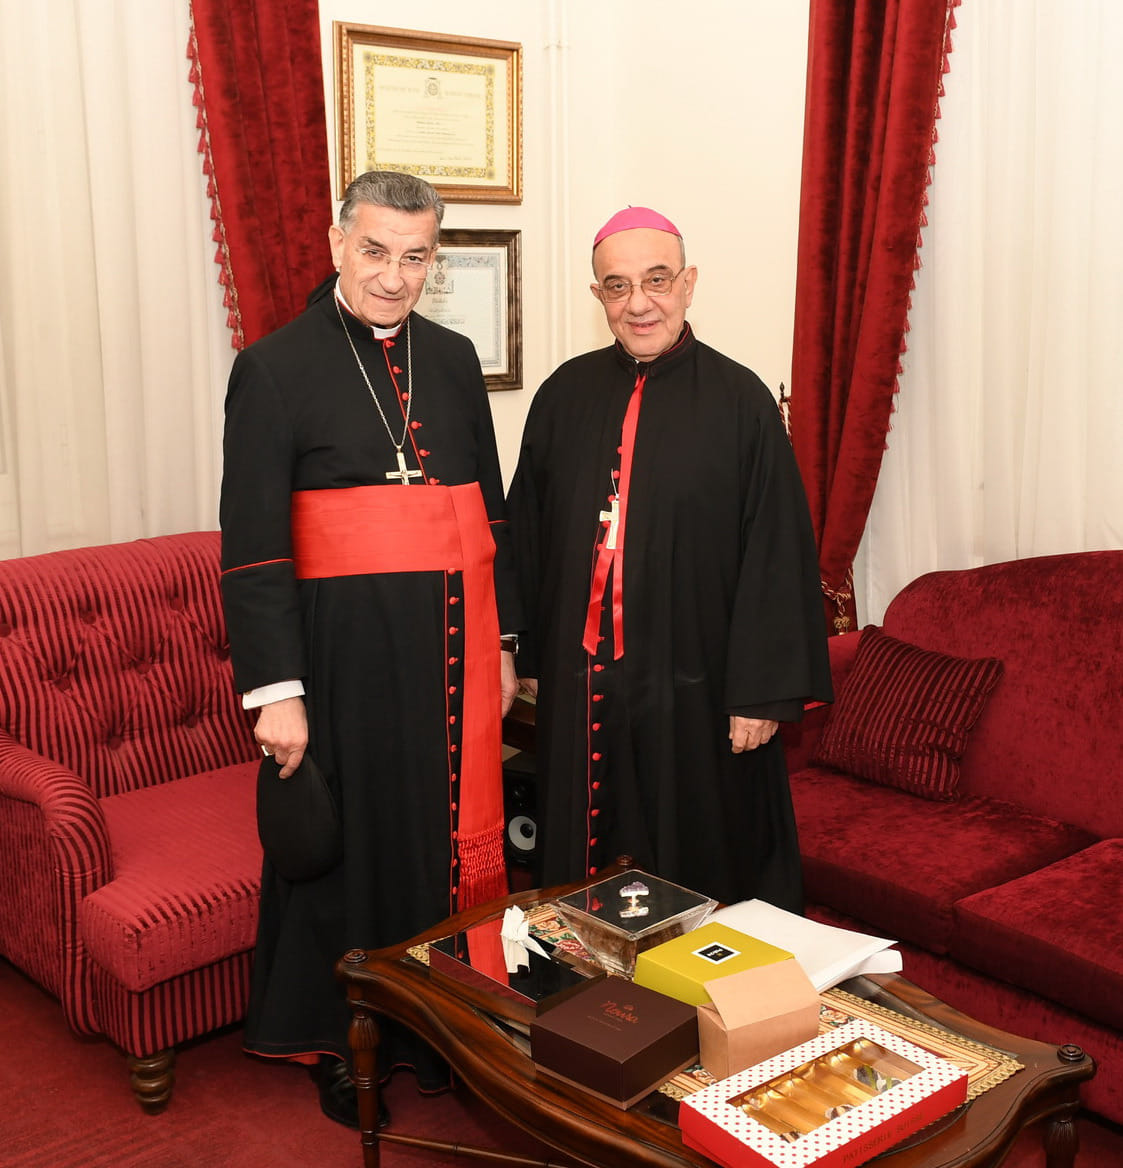 Visiting Patriarch Boutrous El_ Rai